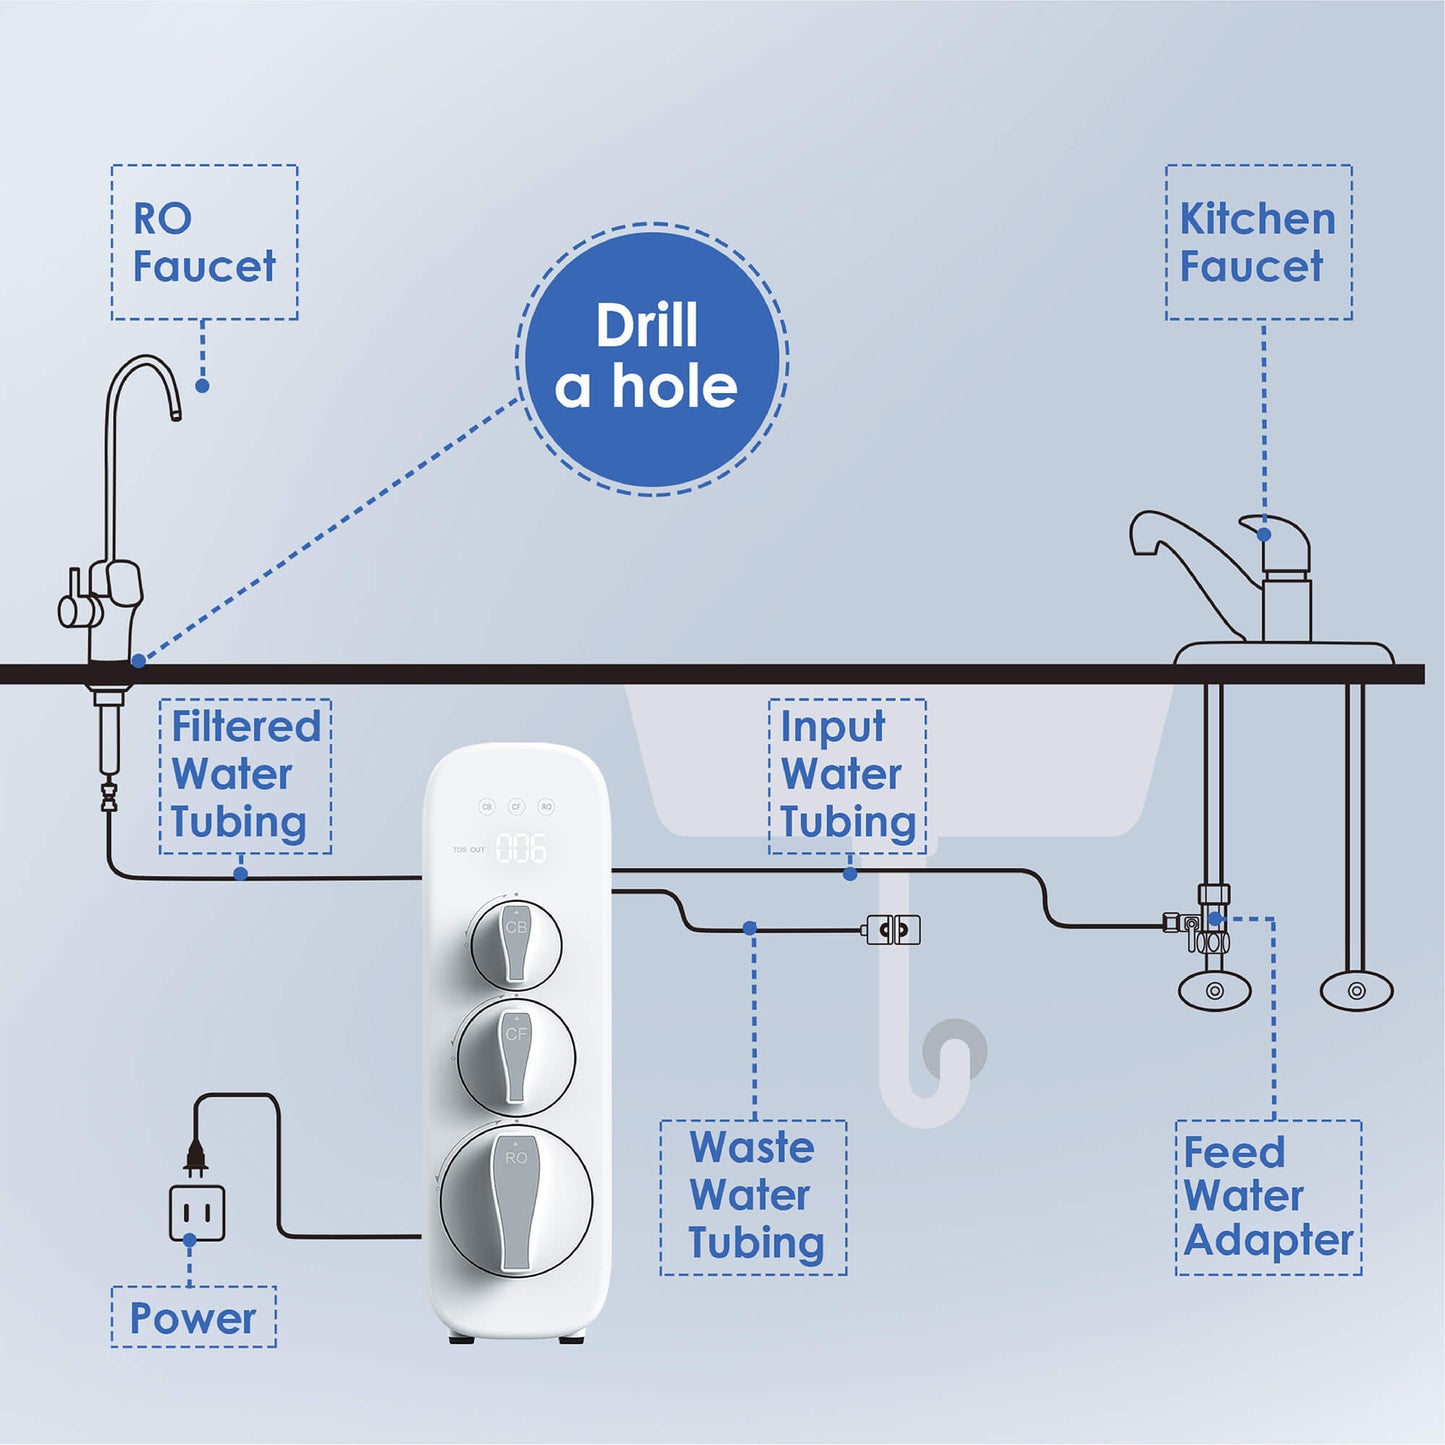 Waterdrop Reverse Osmosis Water Filter System WD-G3-W